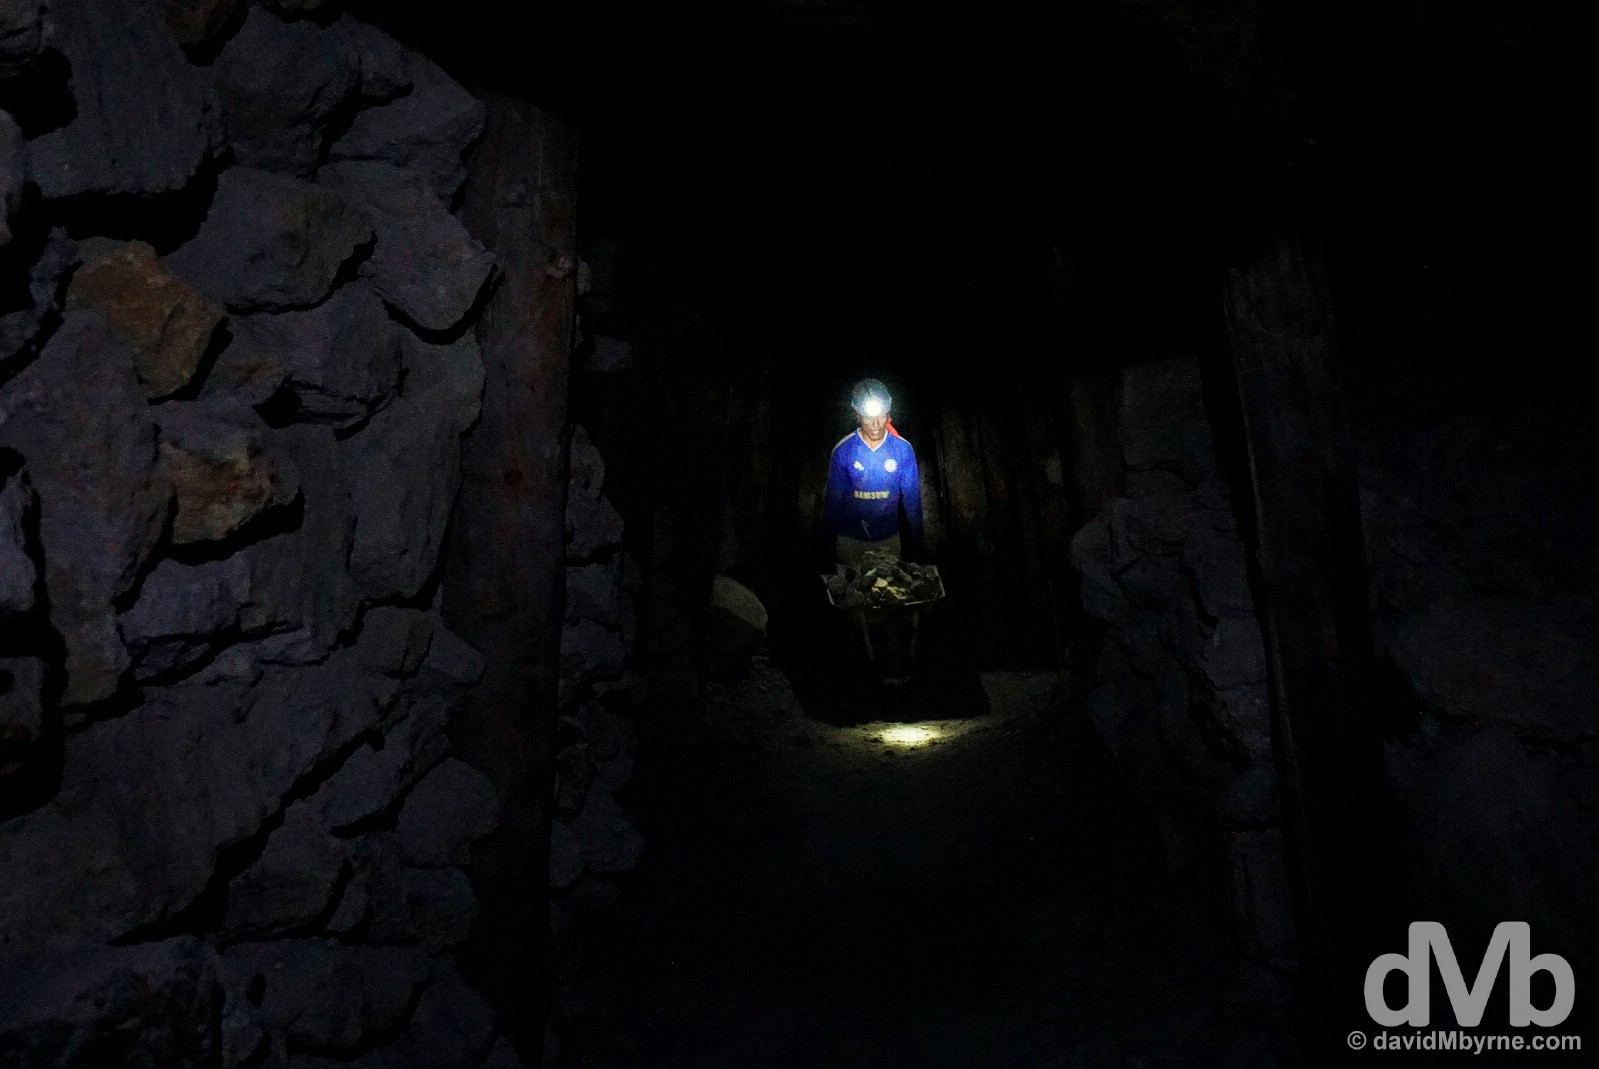 In the deep, dark mineral mines of Cerro Rico, Potosi, Bolivia. September 1, 2015. 